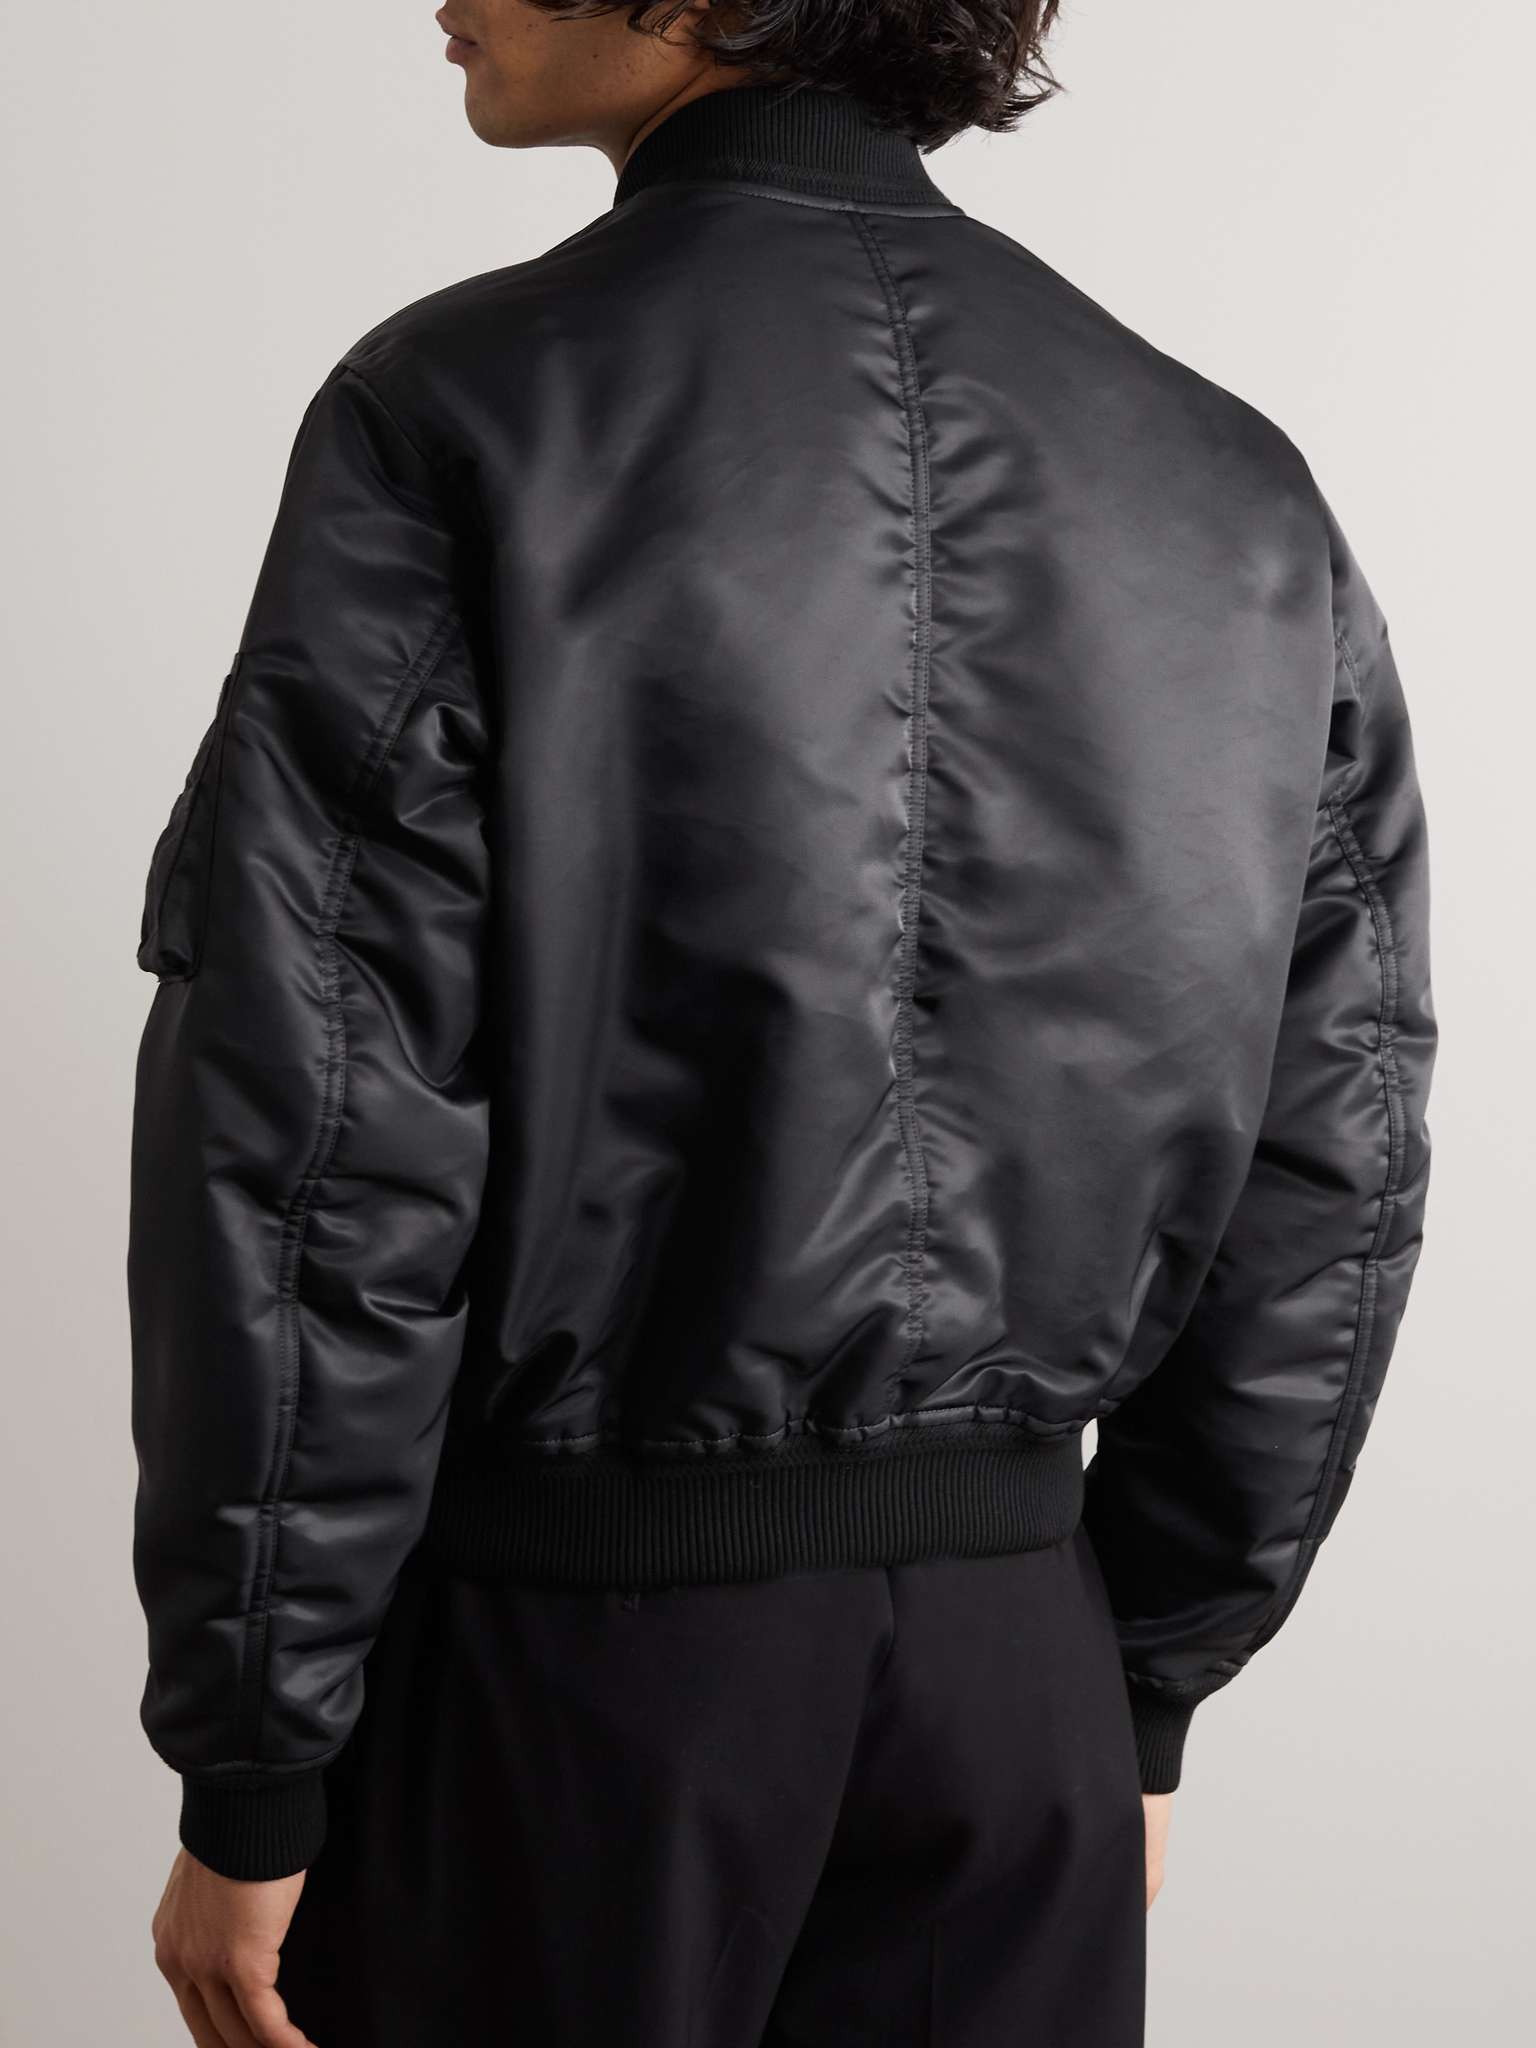 TOM FORD Leather-Trimmed Shell Bomber Jacket for Men | MR PORTER